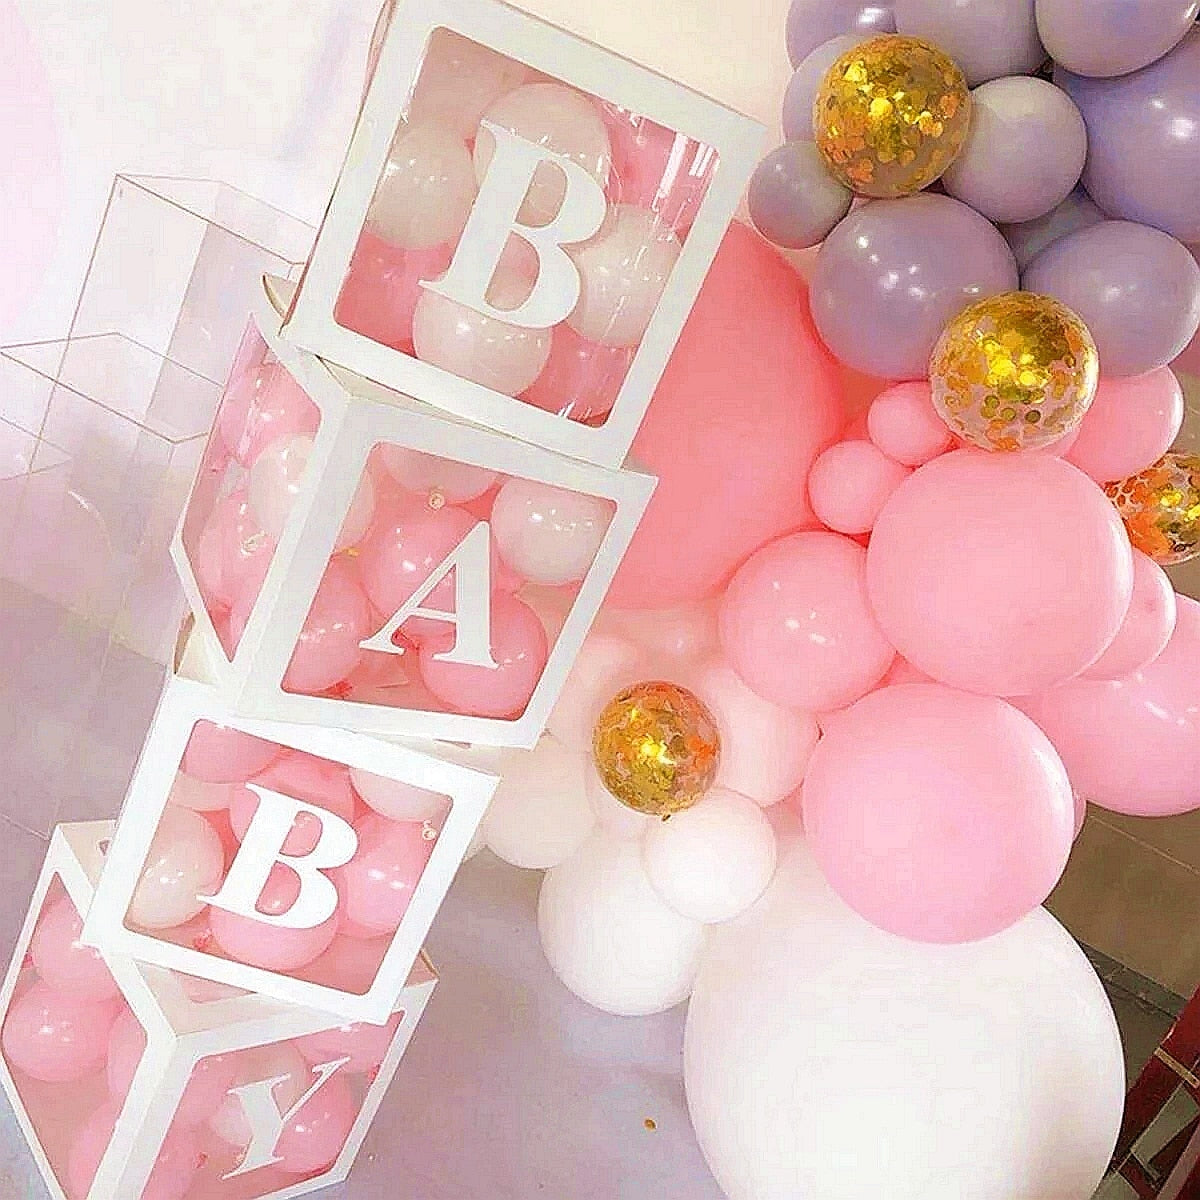 Baby Shower Decoration Boy Girl Transparent Balloon Box Letter Frist 1st Birthday Wedding Party Gender Reveal Baptism Decoration